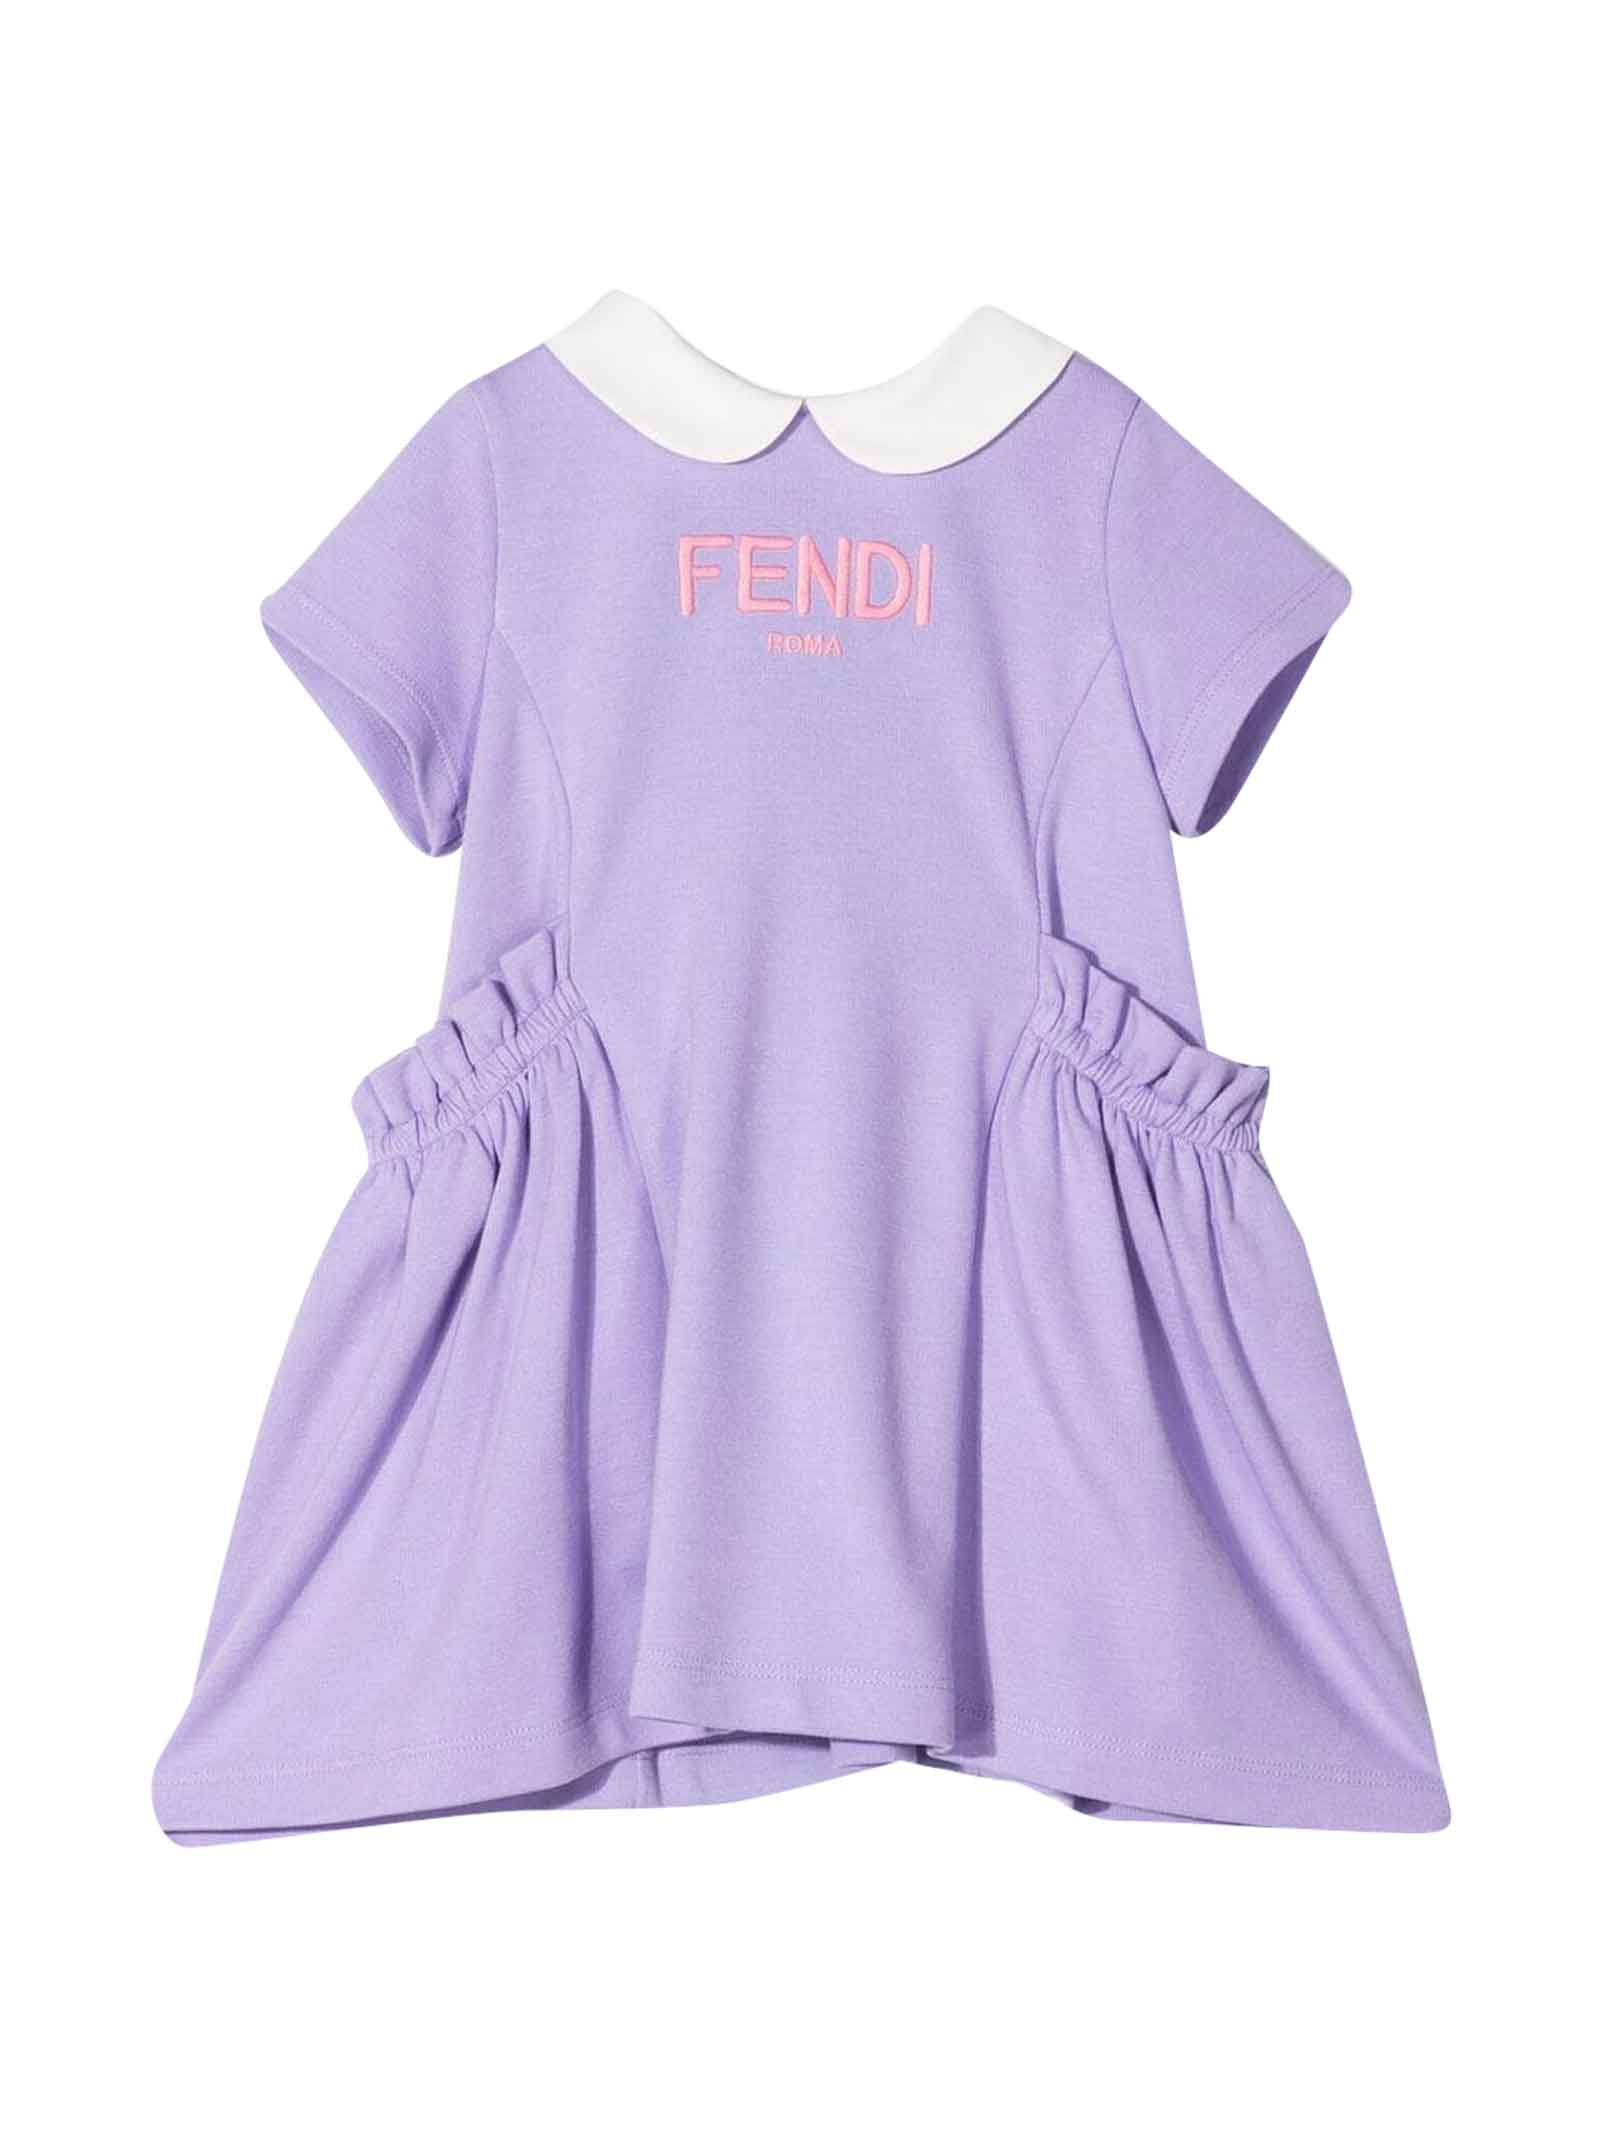 Fendi Lilac Dress Baby Girl